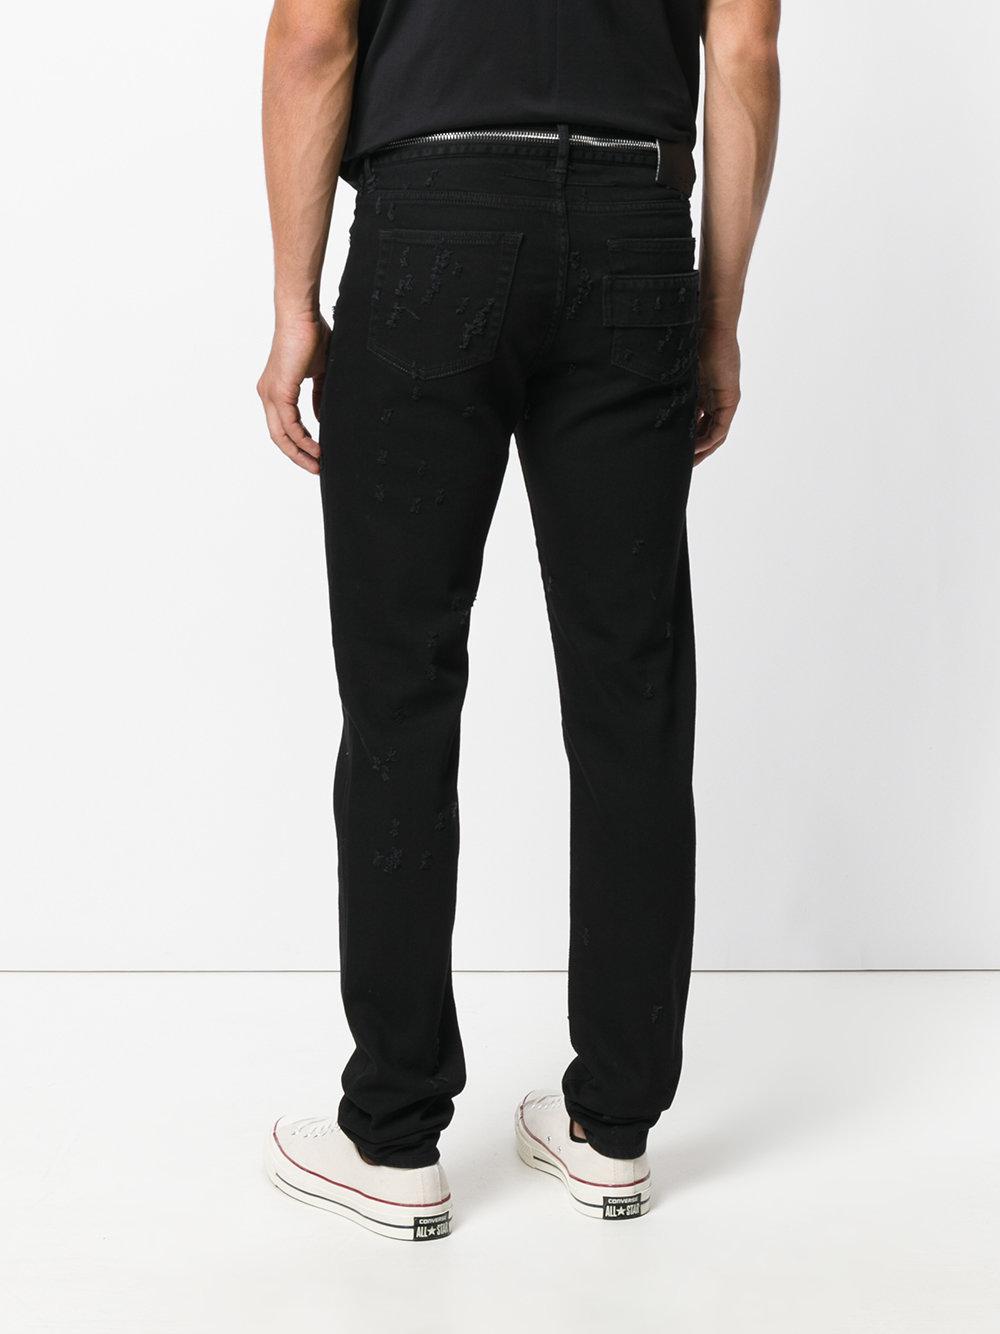 Givenchy Denim Distressed Slim Fit Jeans in Black for Men - Lyst